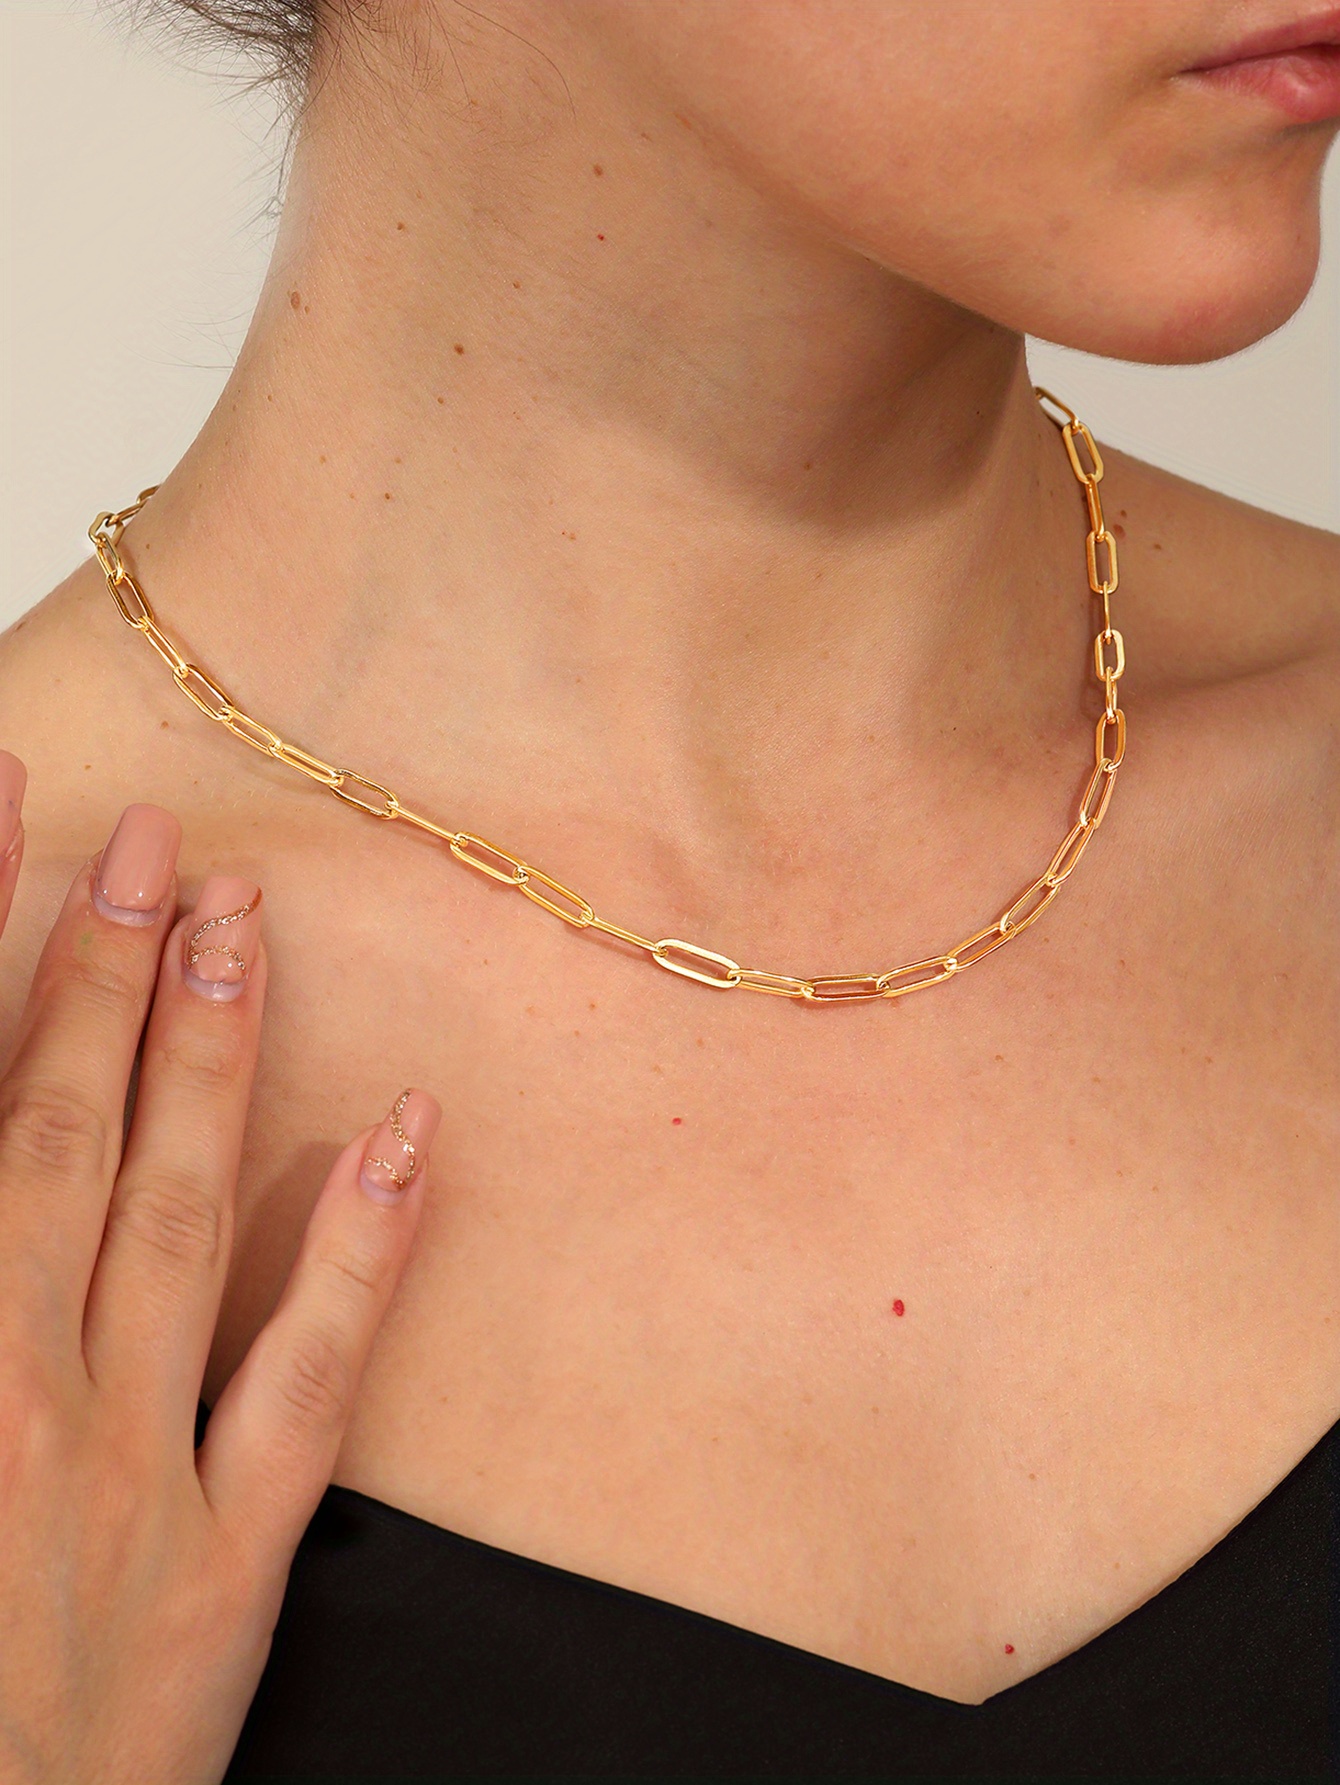 22k / 916 Gold Paper Clip Necklace – Best Gold Shop